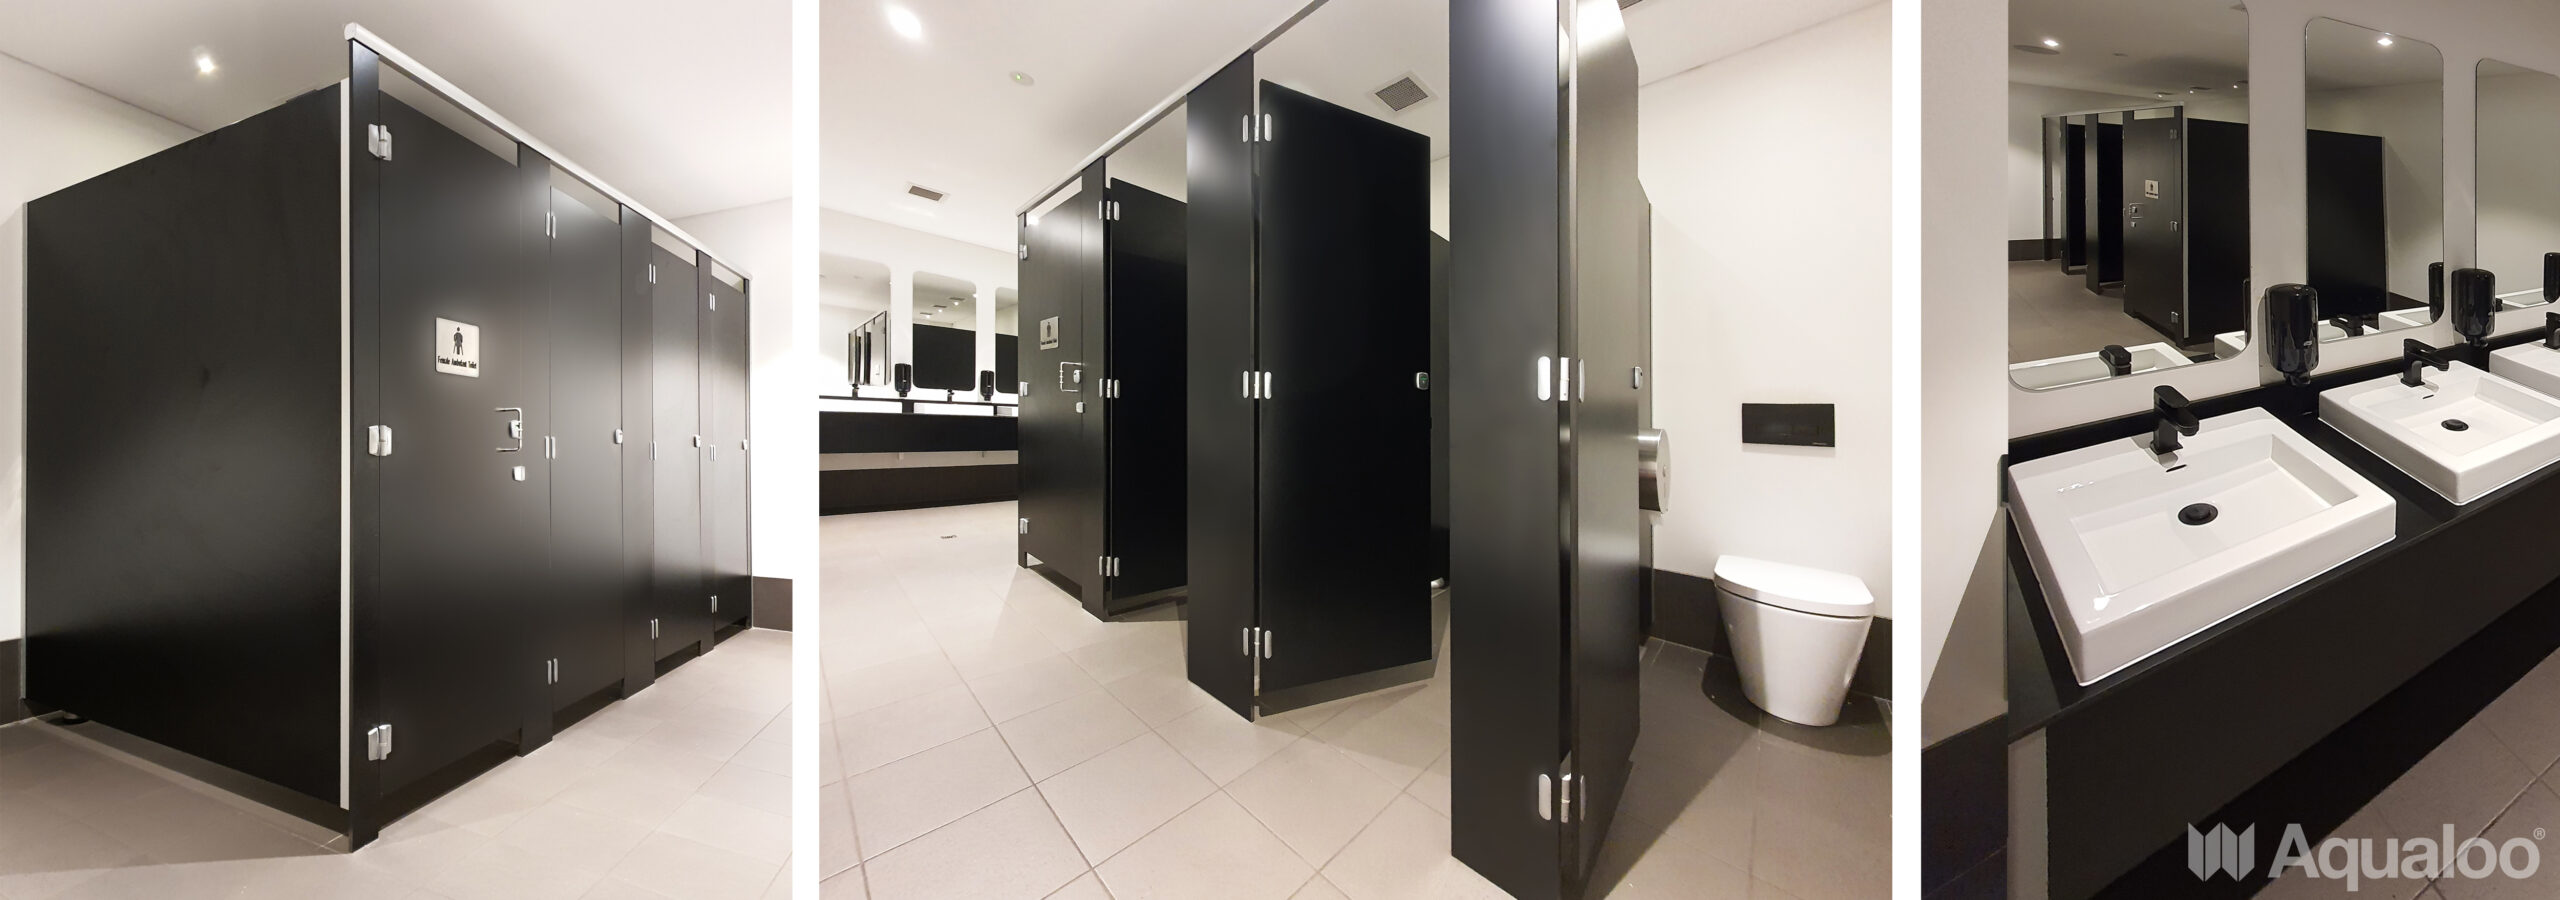 Aqualoo Regent Toilet Cubicles and Fully Recessed Compact Laminate Vanity in Maica Design Black